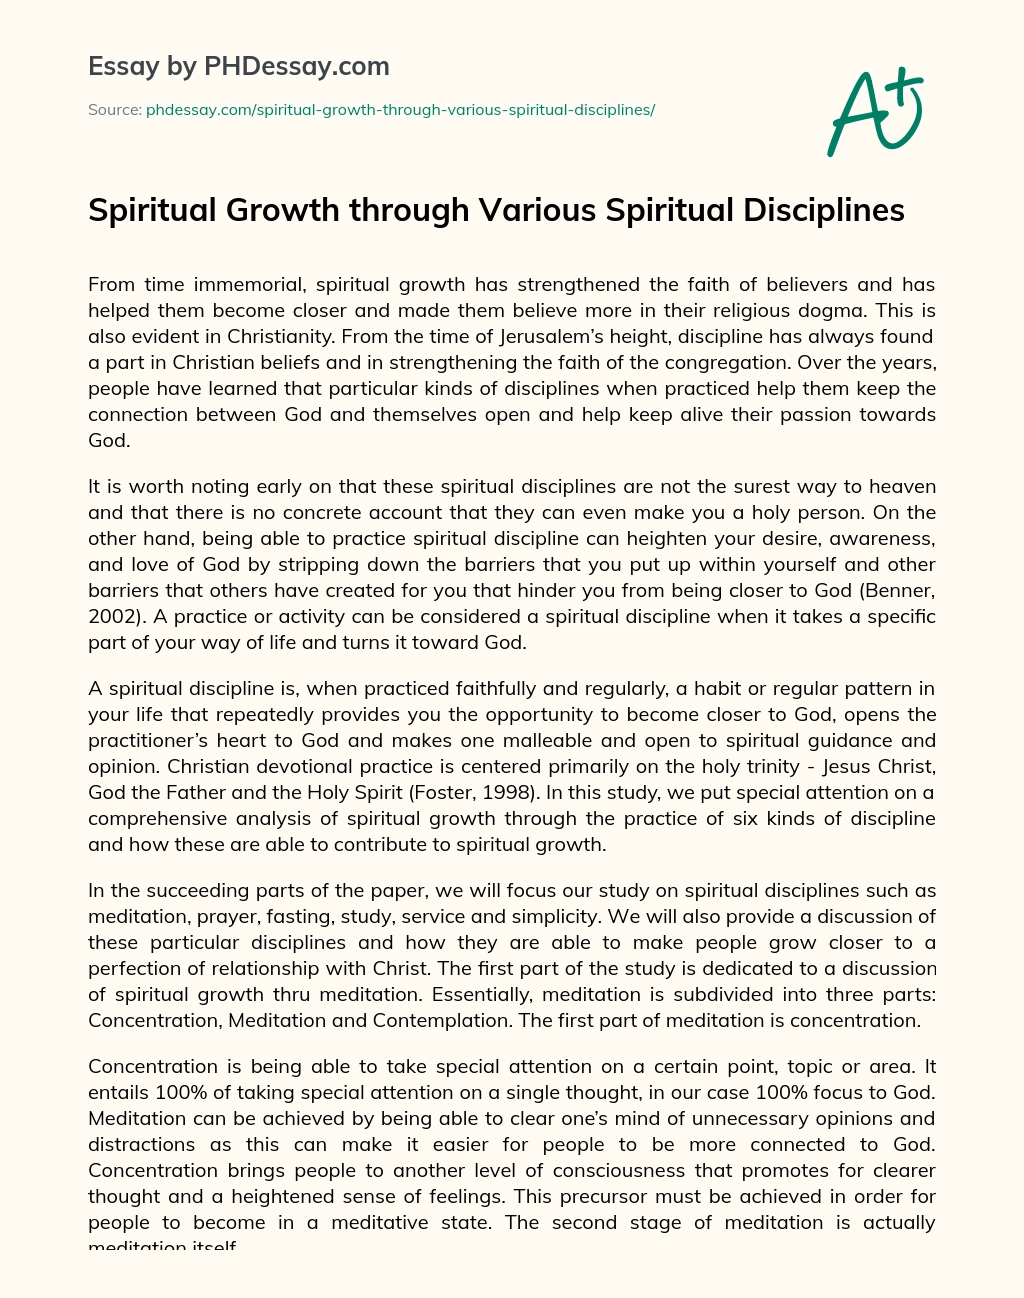 Spiritual Growth through Various Spiritual Disciplines essay